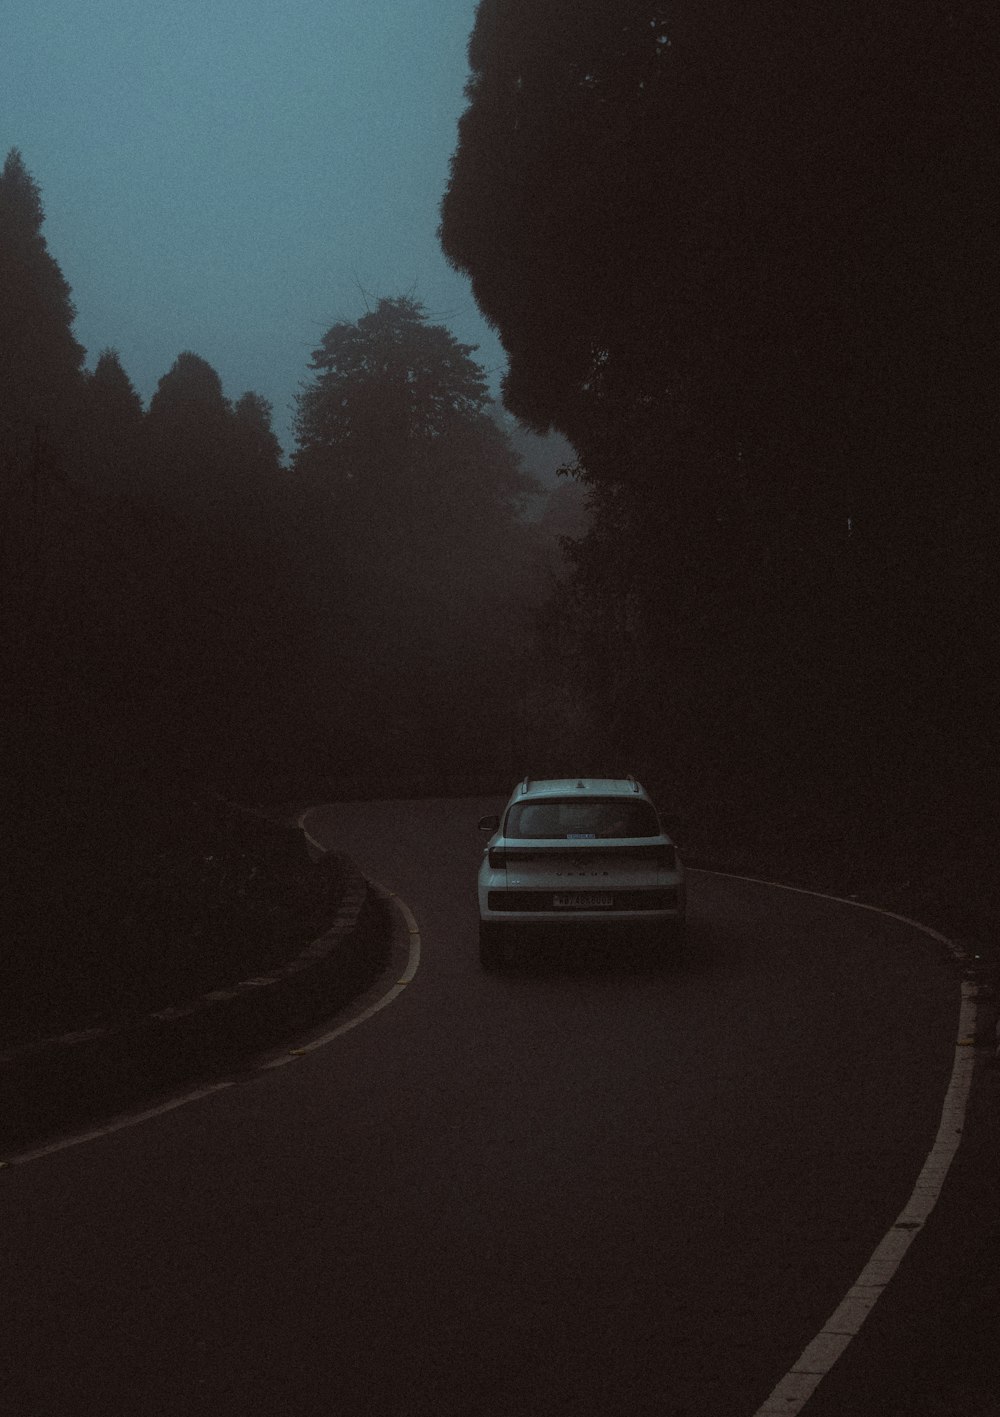 a car driving down a road in the dark